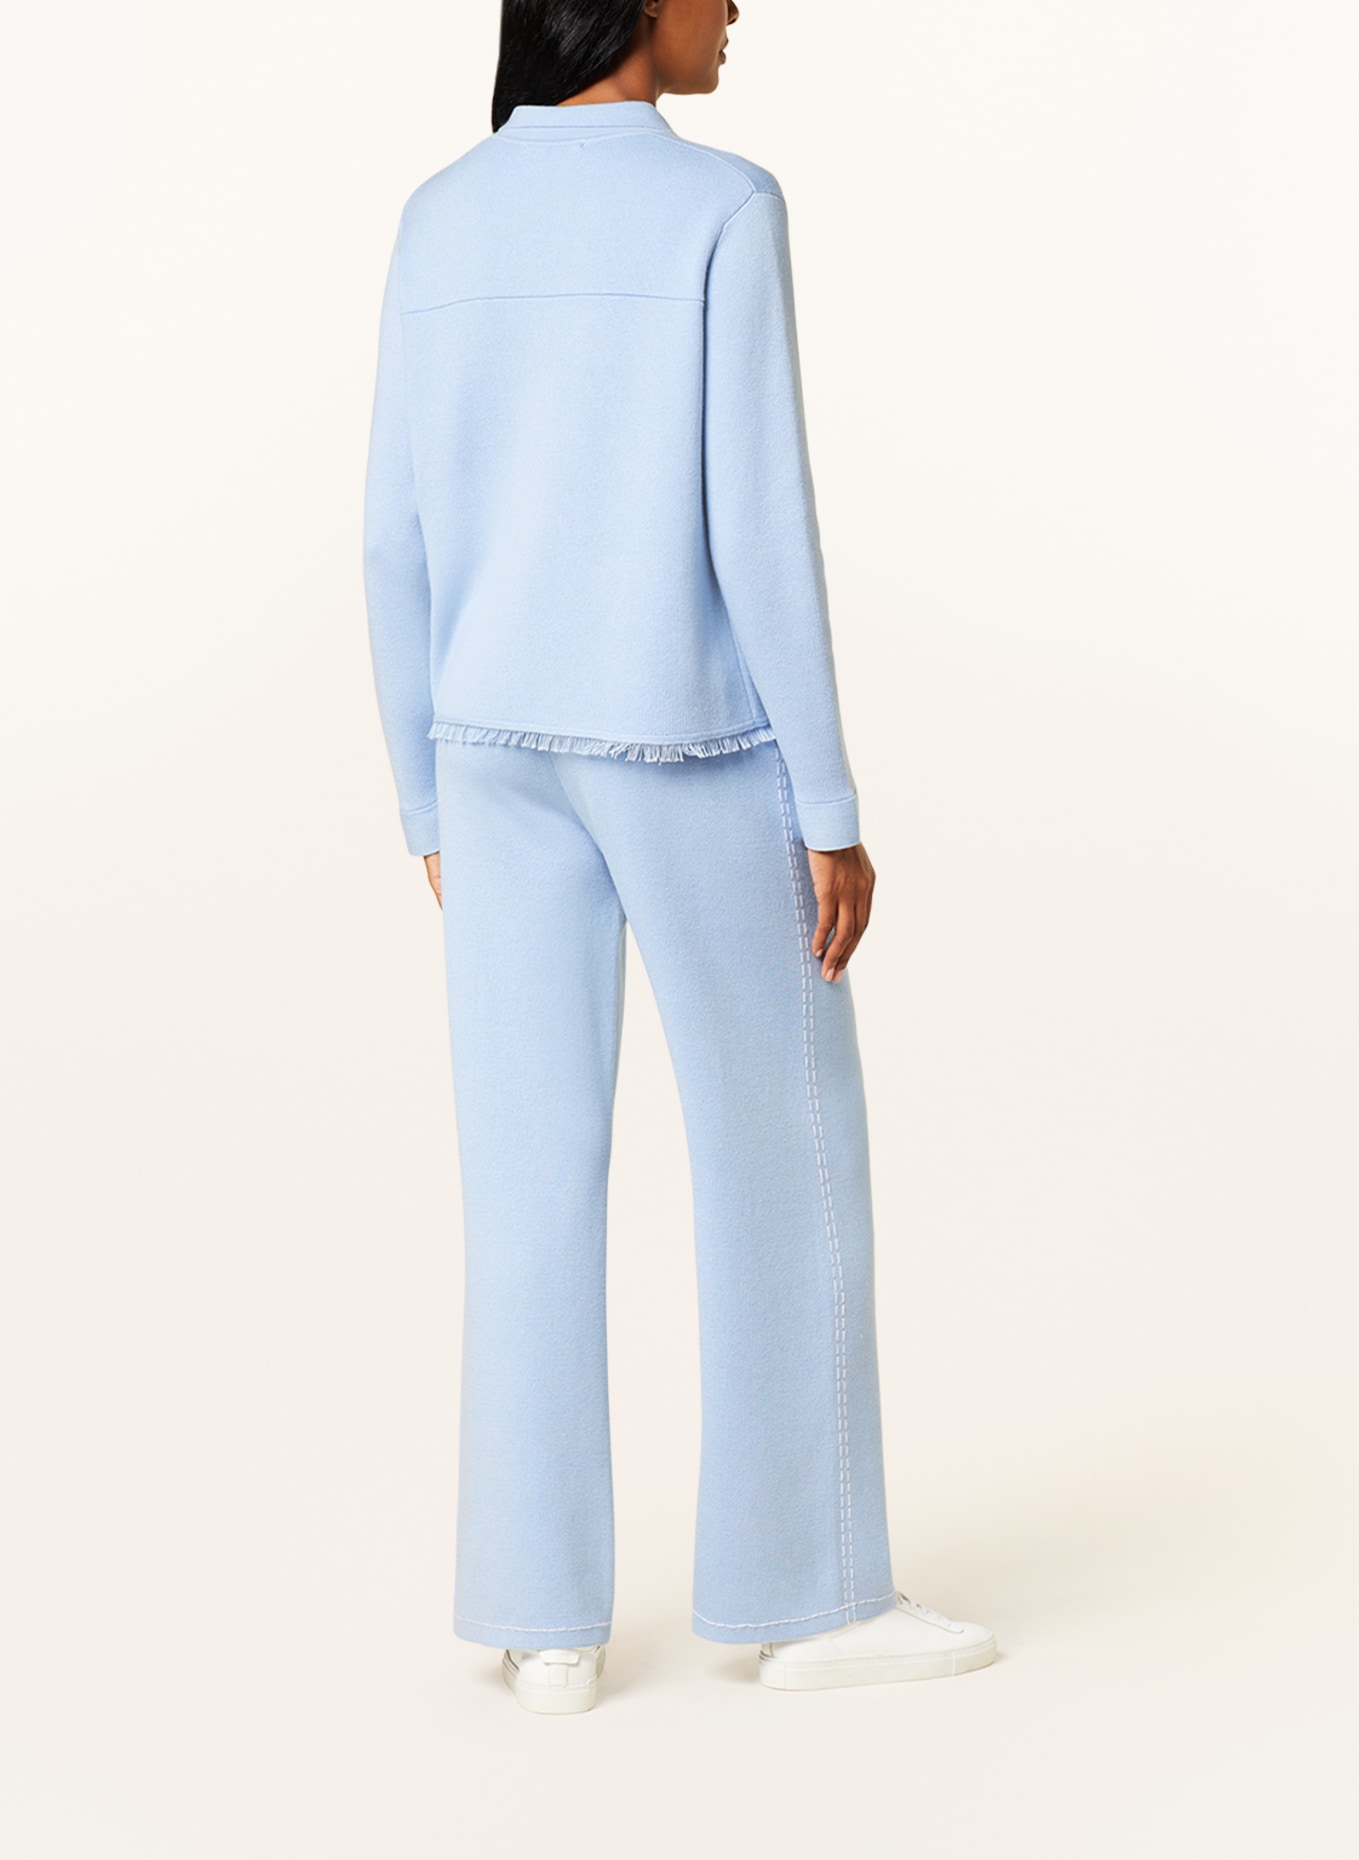 (THE MERCER) N.Y. Knit overshirt with fringes, Color: LIGHT BLUE (Image 3)